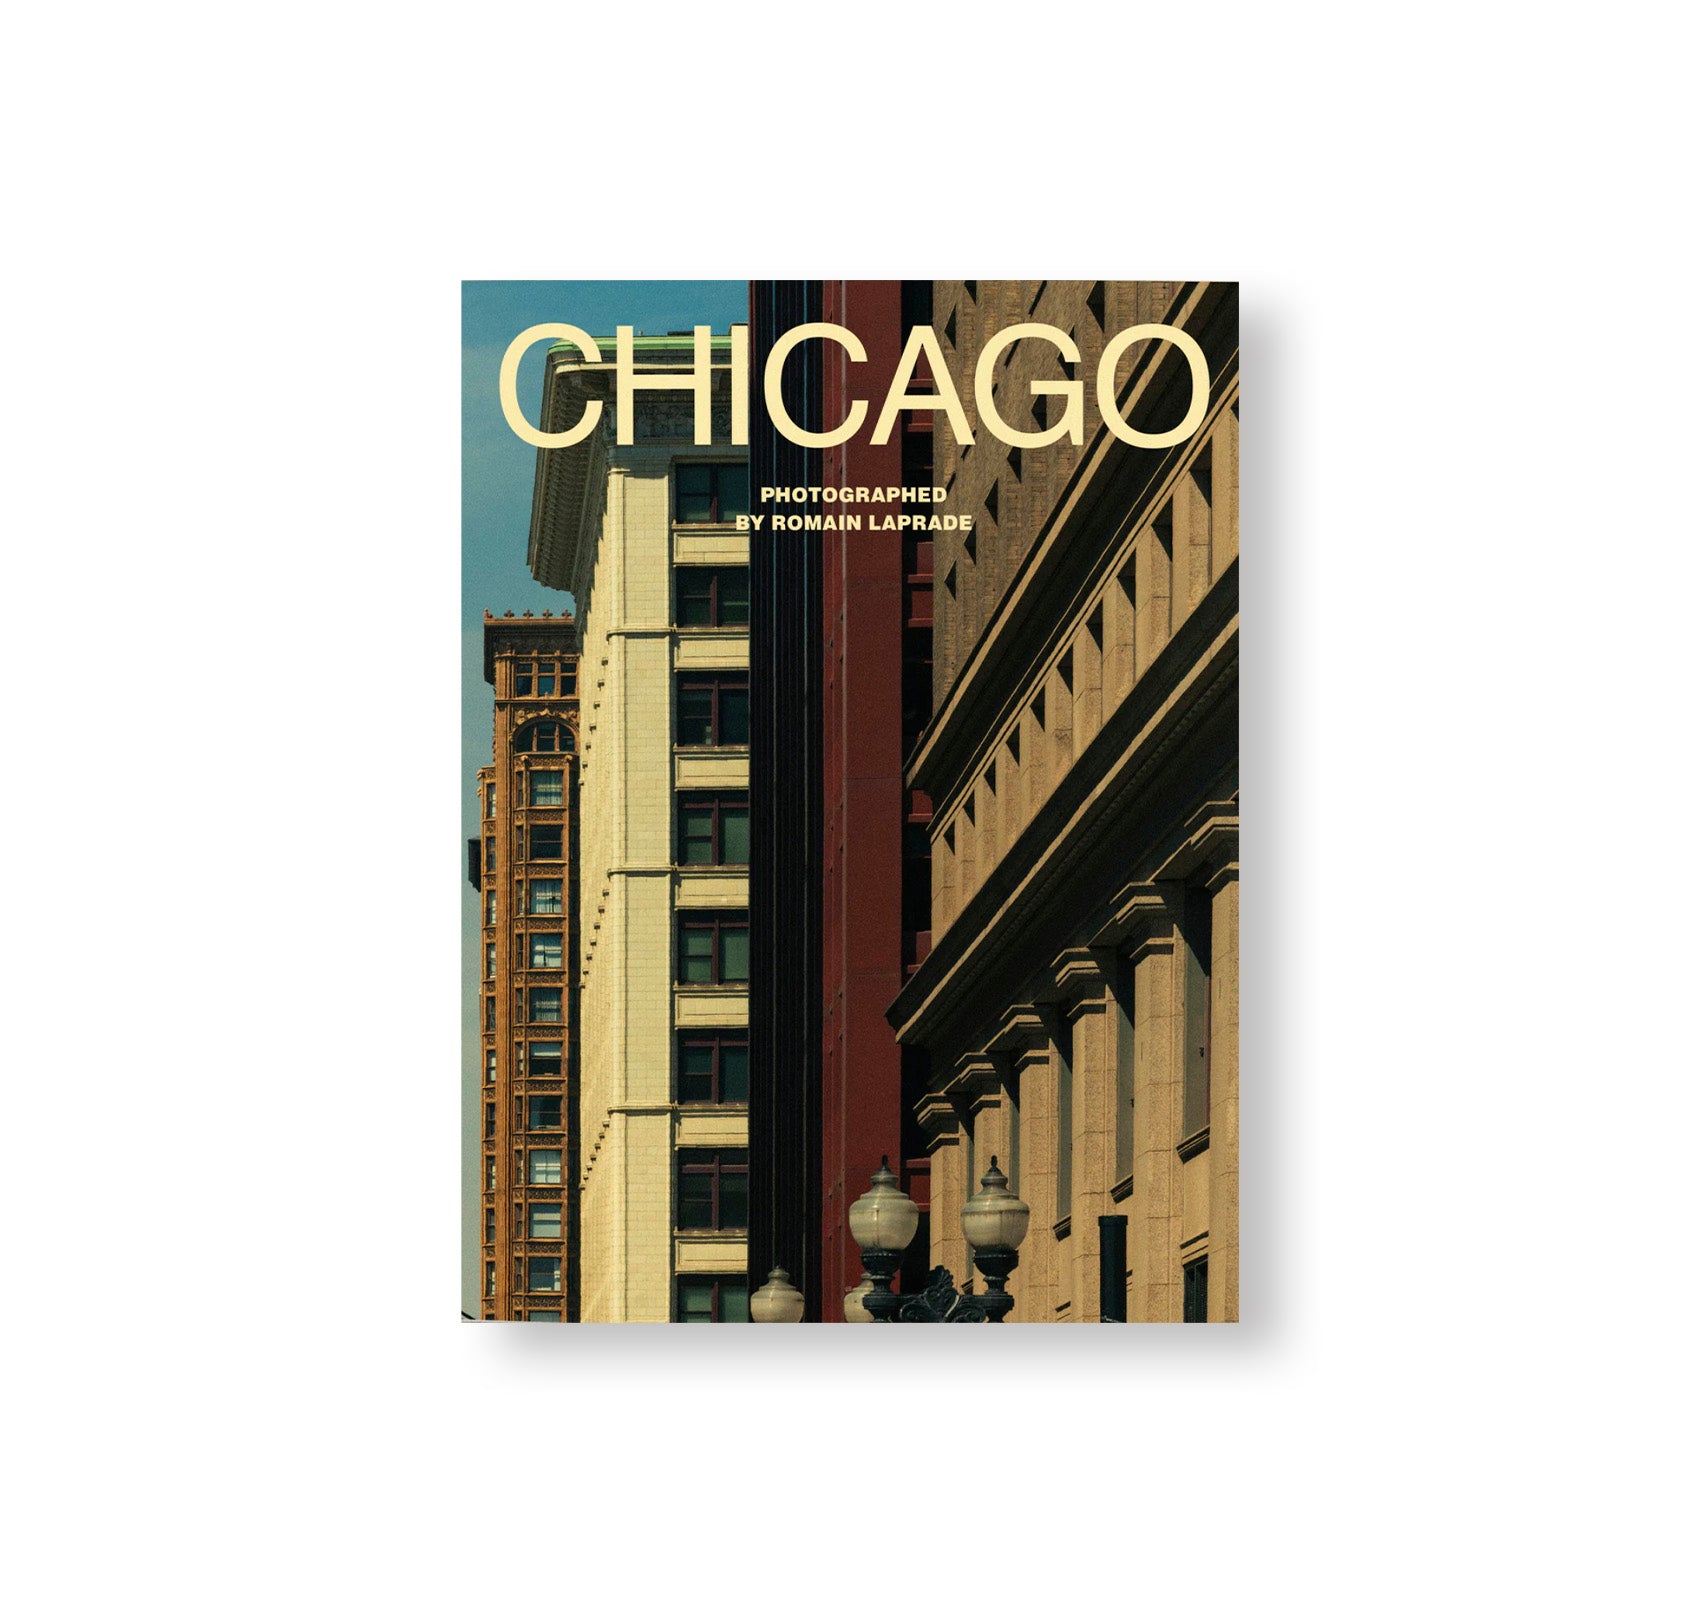 CHICAGO by Romain Laprade